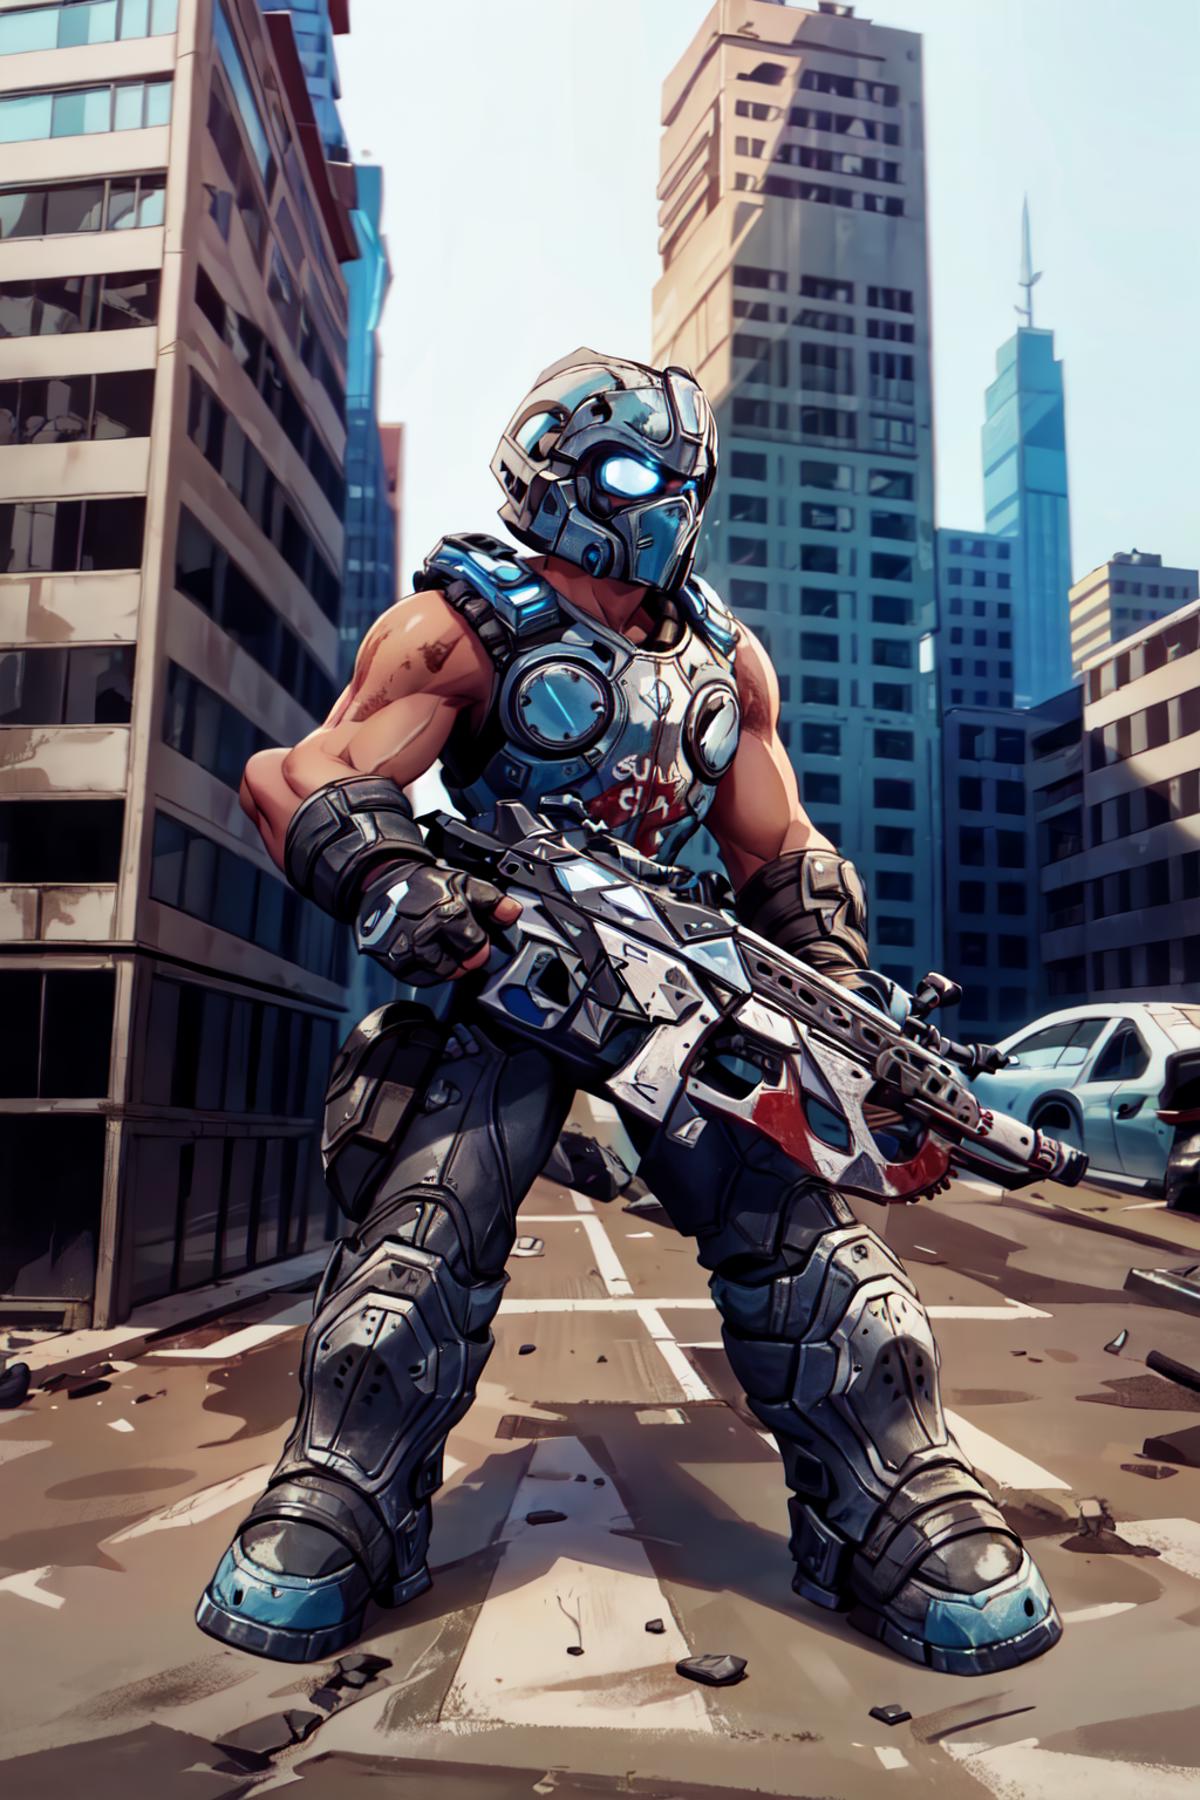 Clayton Carmine | Gears of War image by Kayako